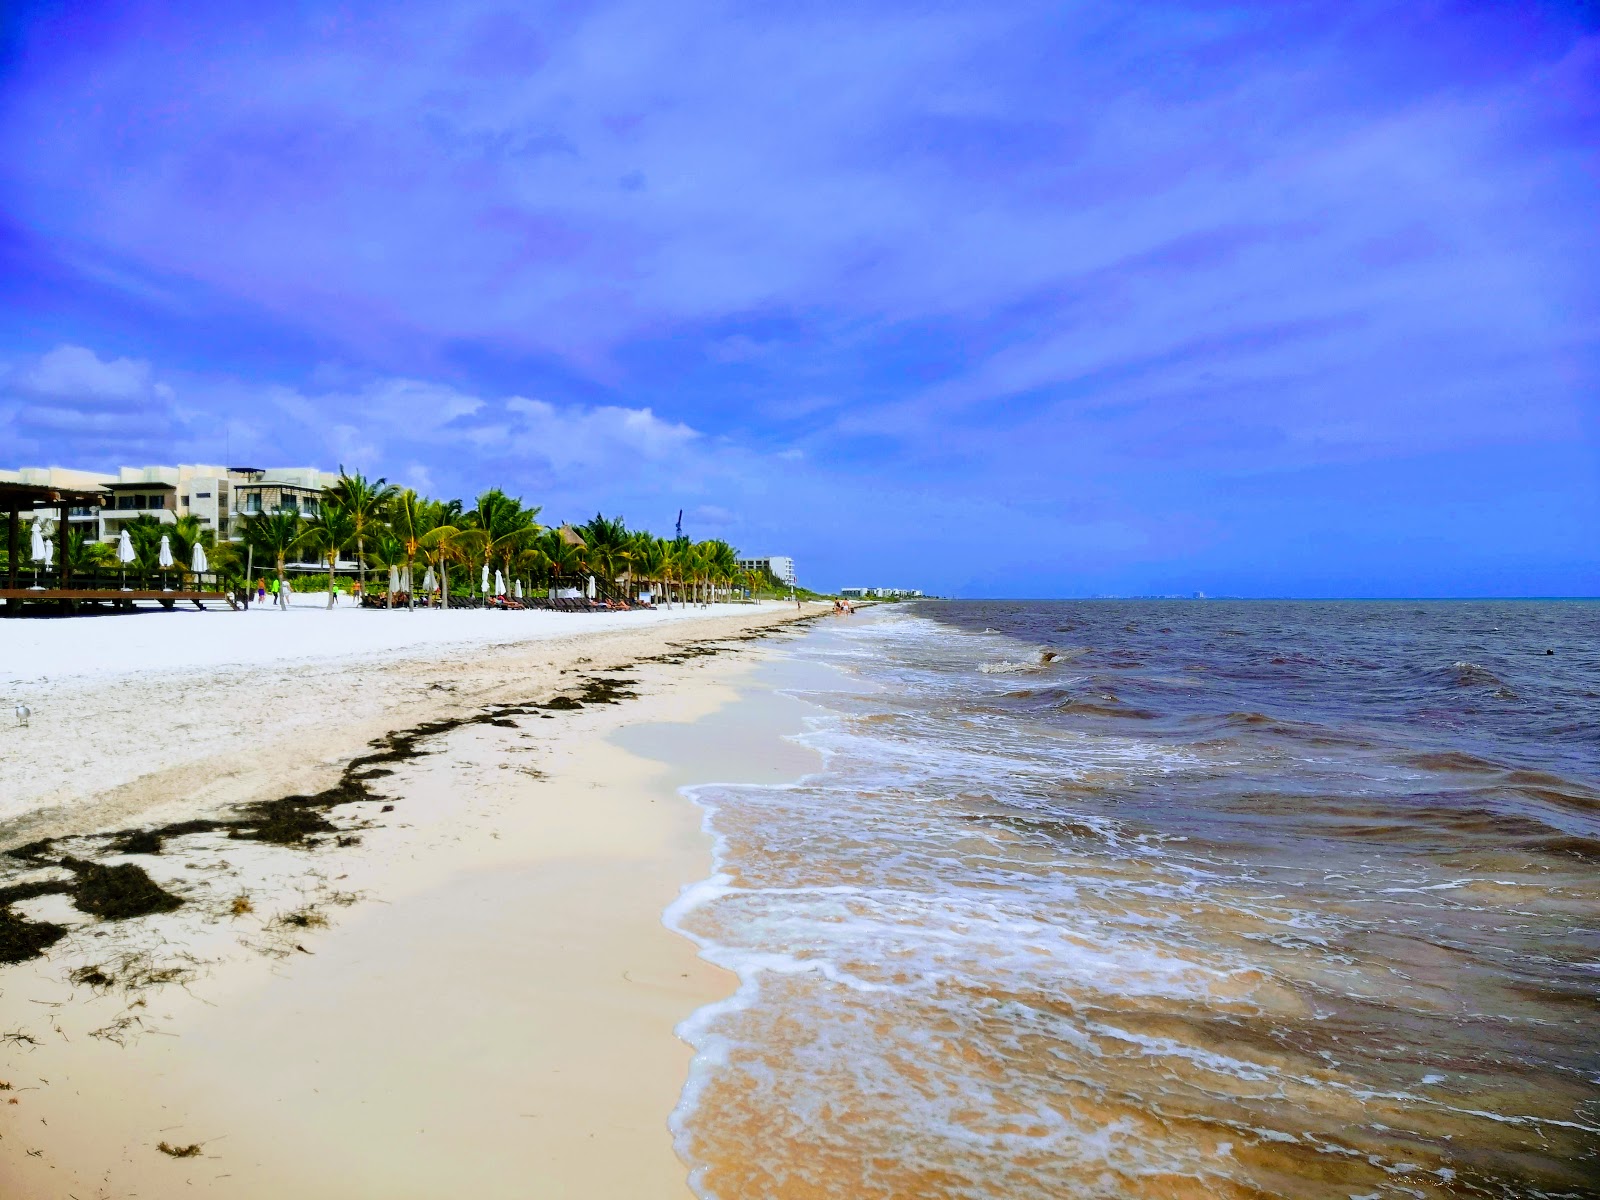 Photo of Royalton Riviera Cancun with long straight shore